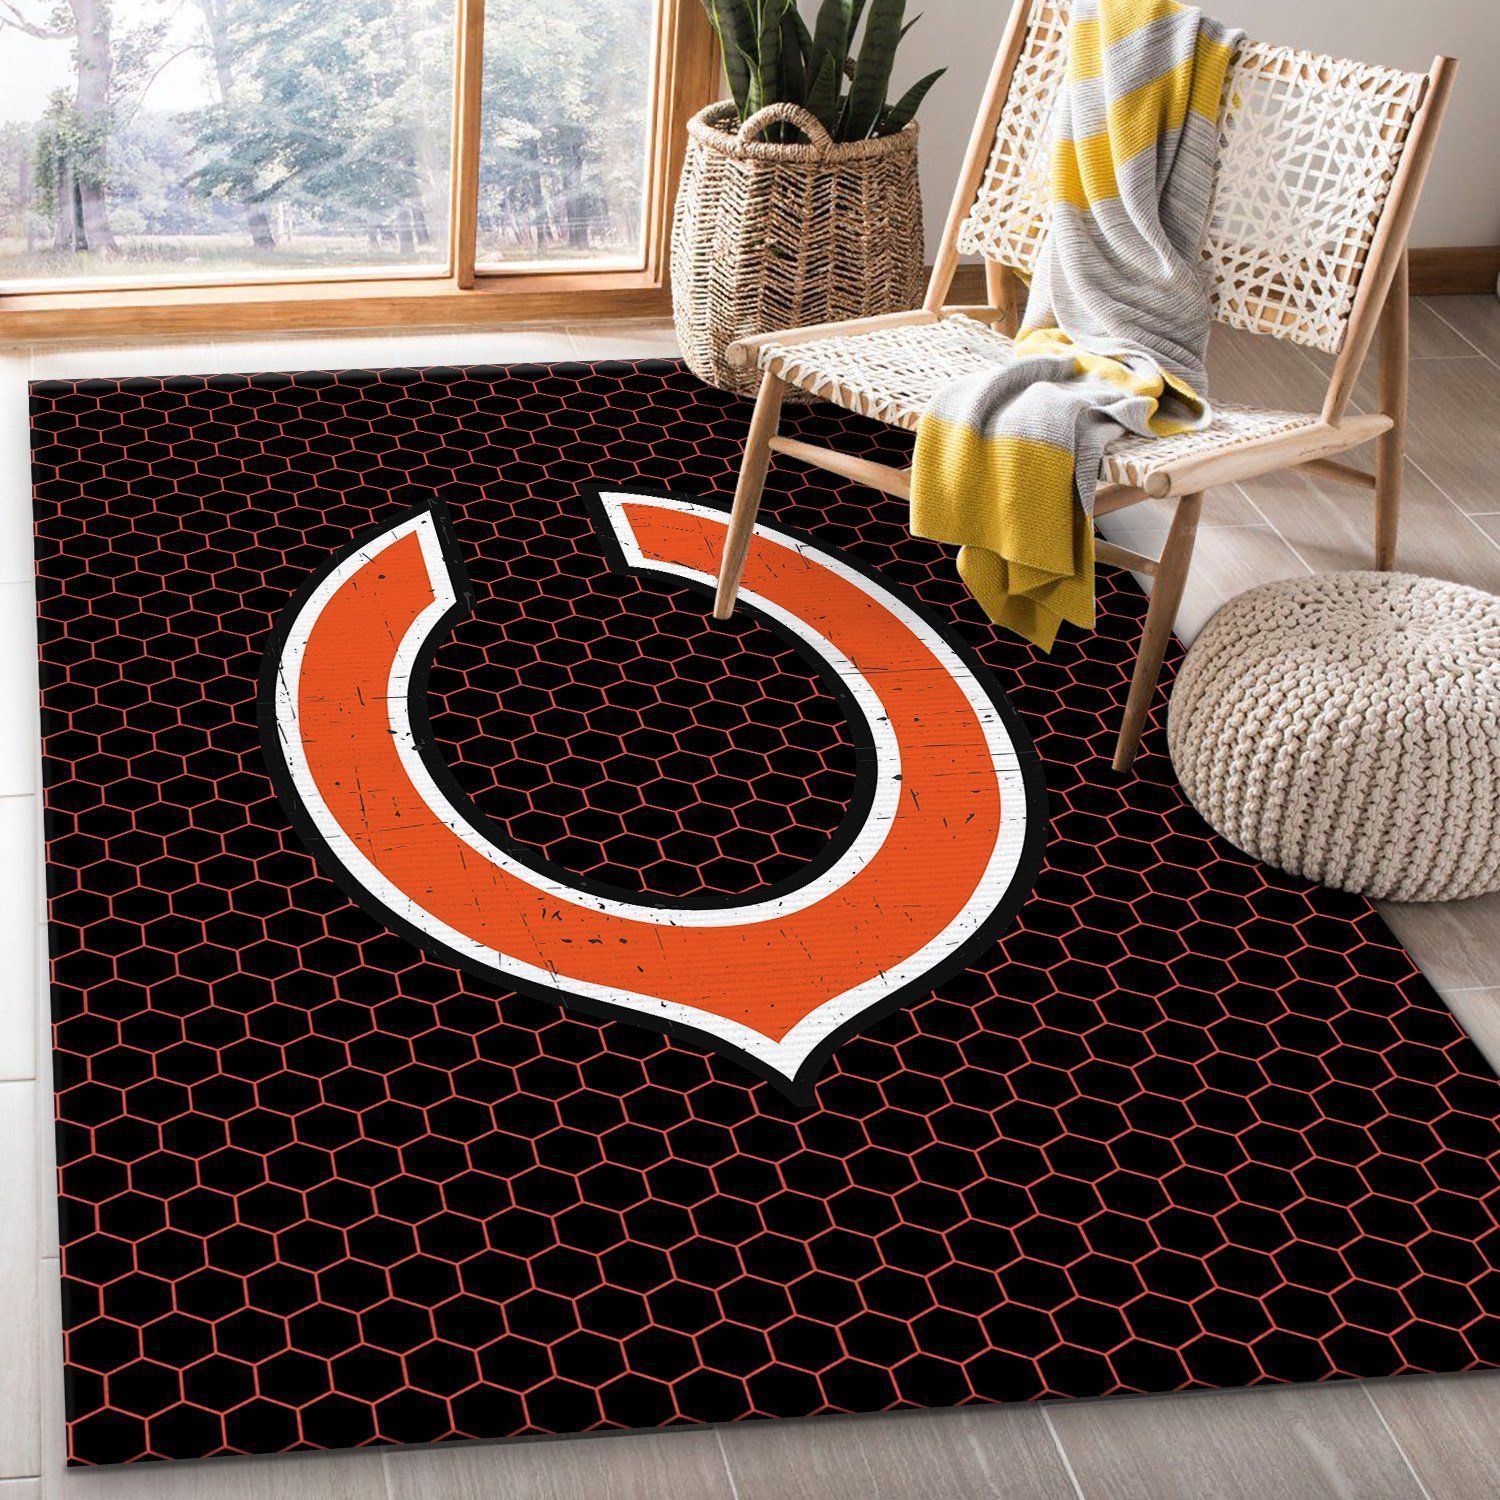 Chicago bears nfl rug room carpet sport custom area floor home decor - large ( 5 x 8 ft )